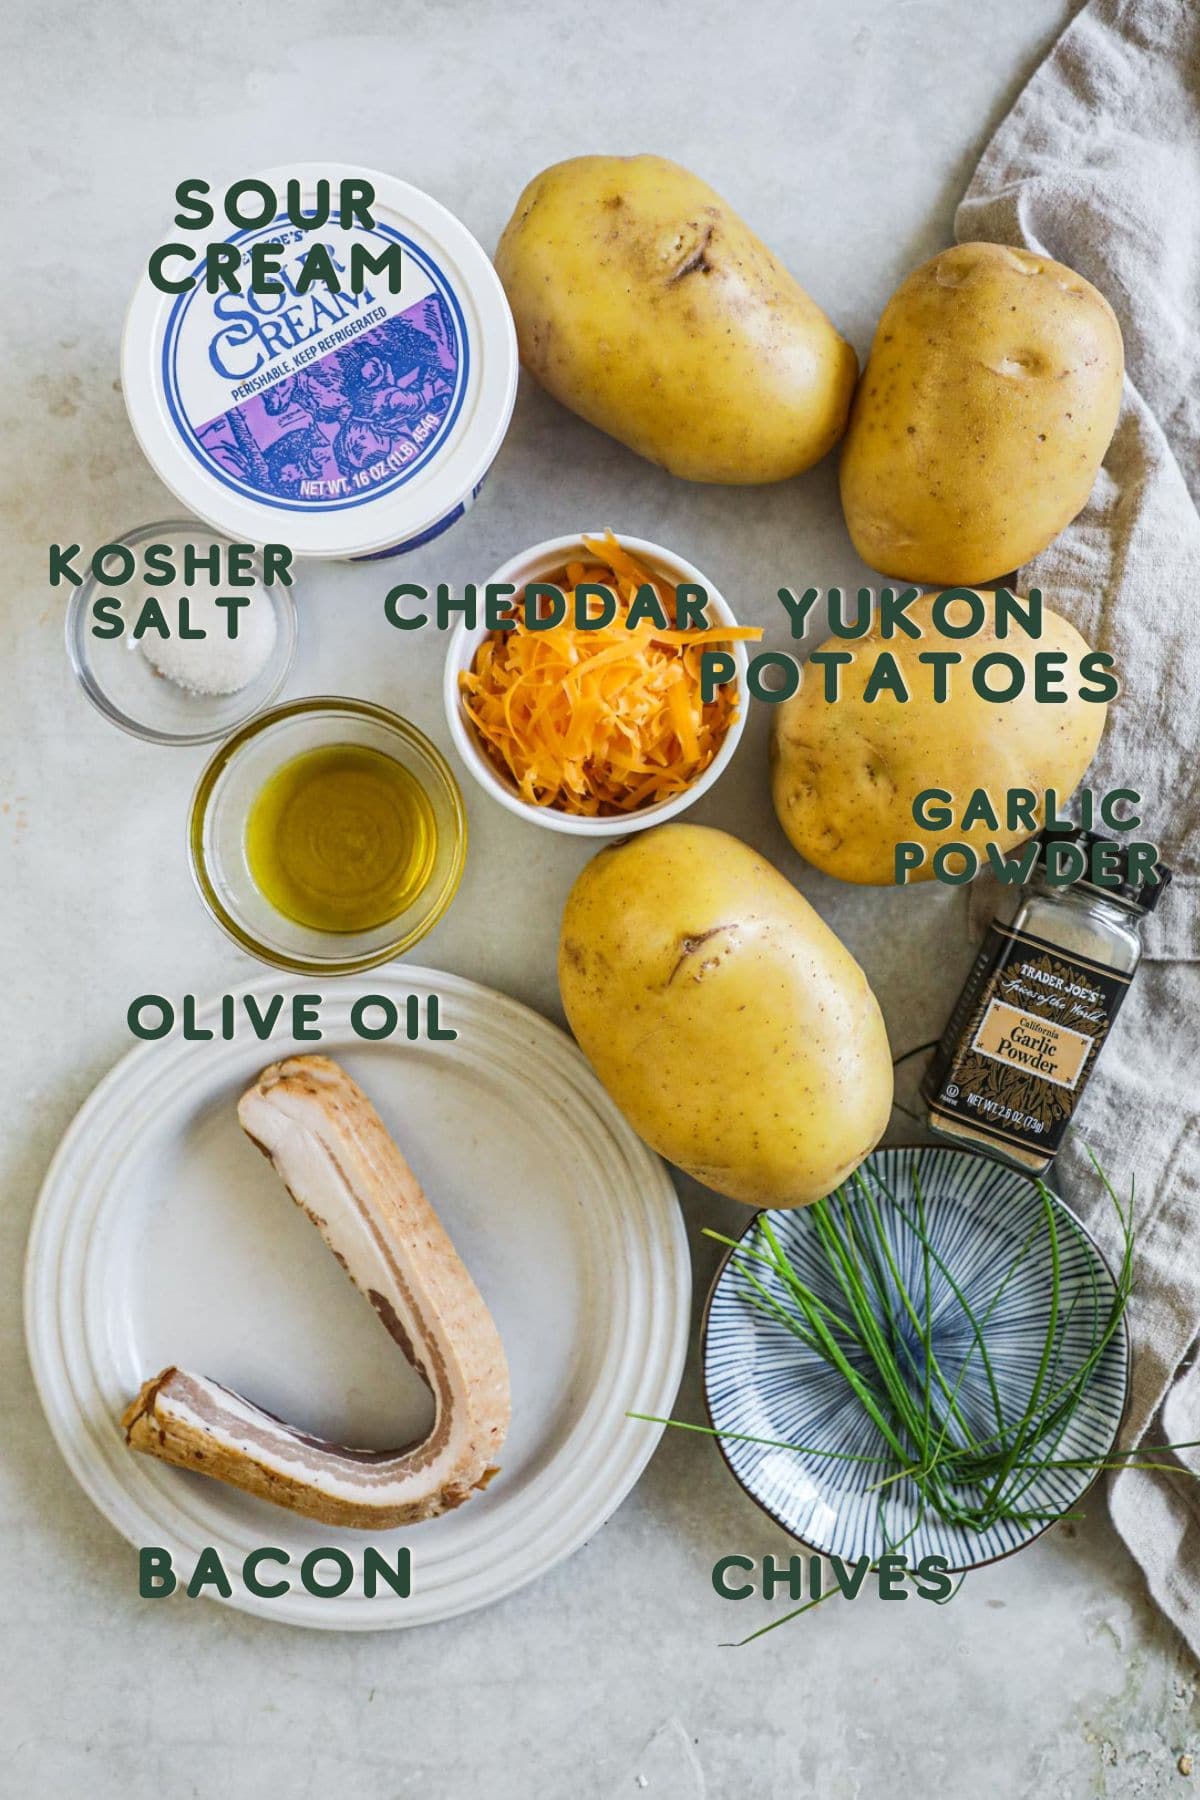 Ingredients to make hasselback potatoes, sour cream, kosher salt, yukon potatoes, cheddar, olive oil, garlic powder, chives, bacon.